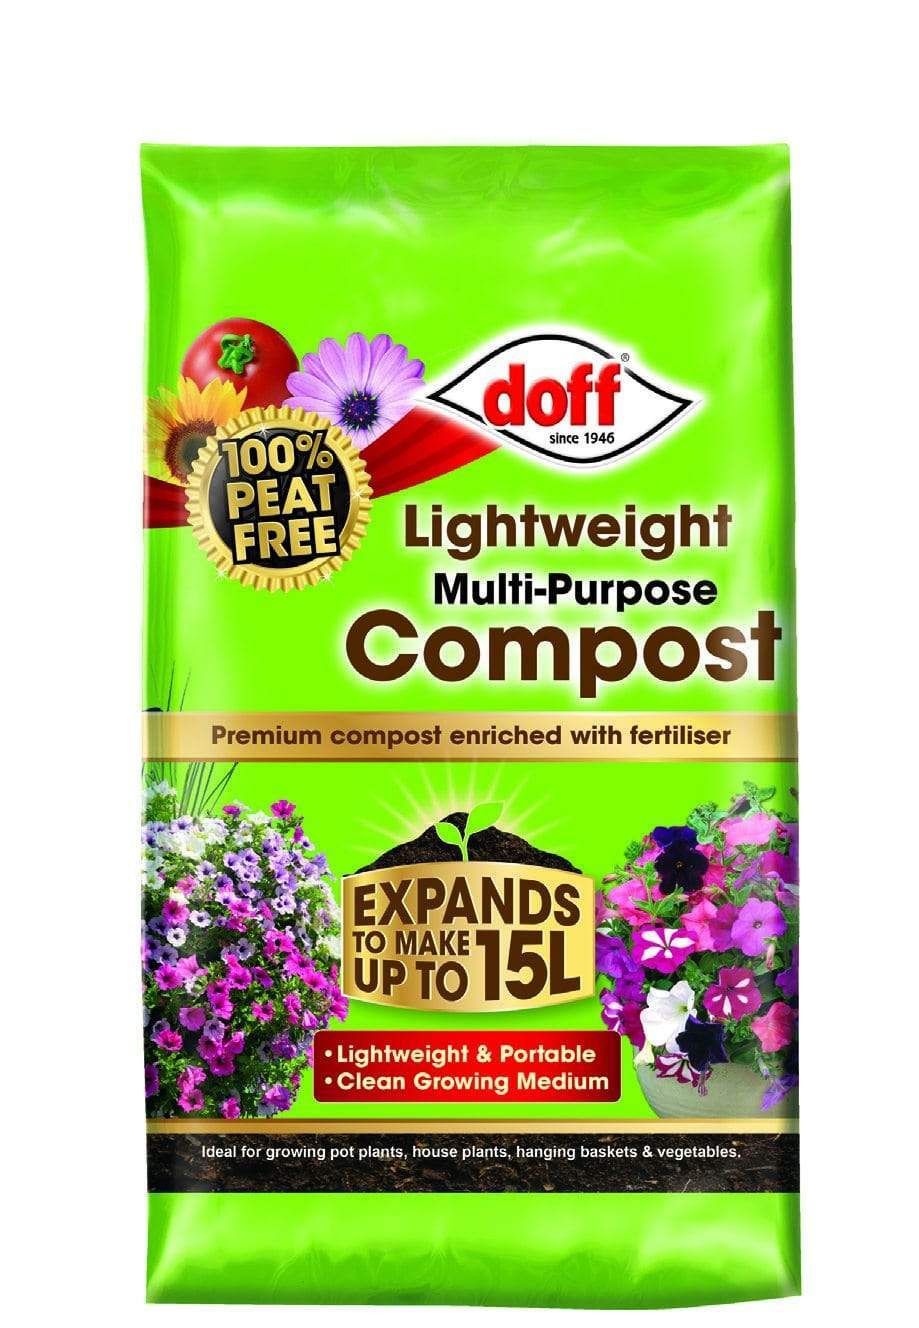 Doff Compost Doff Lightweight Multi-Purpose Compost